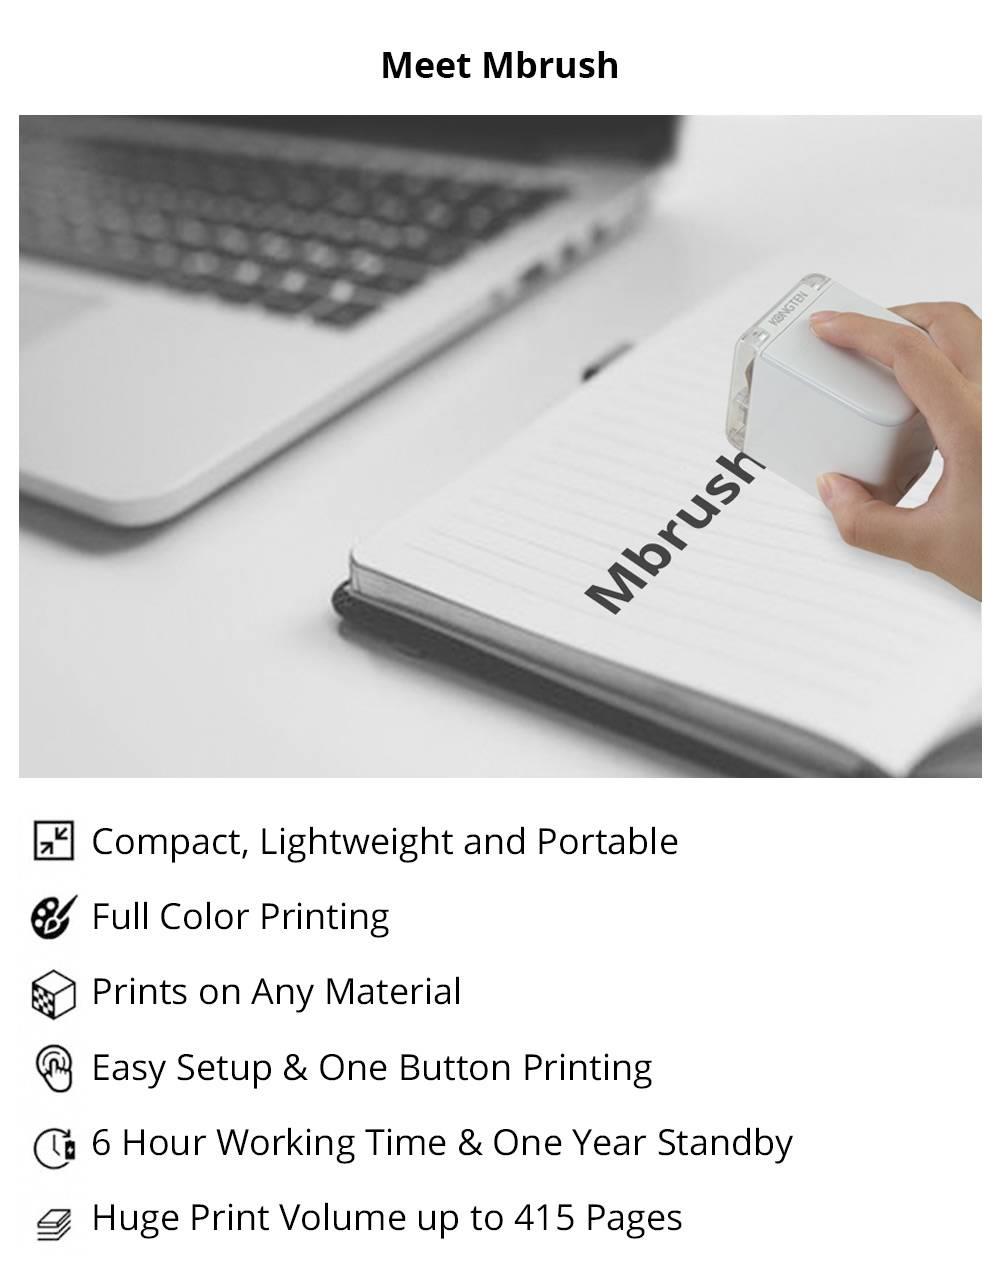 MBrush Handheld Color Printer